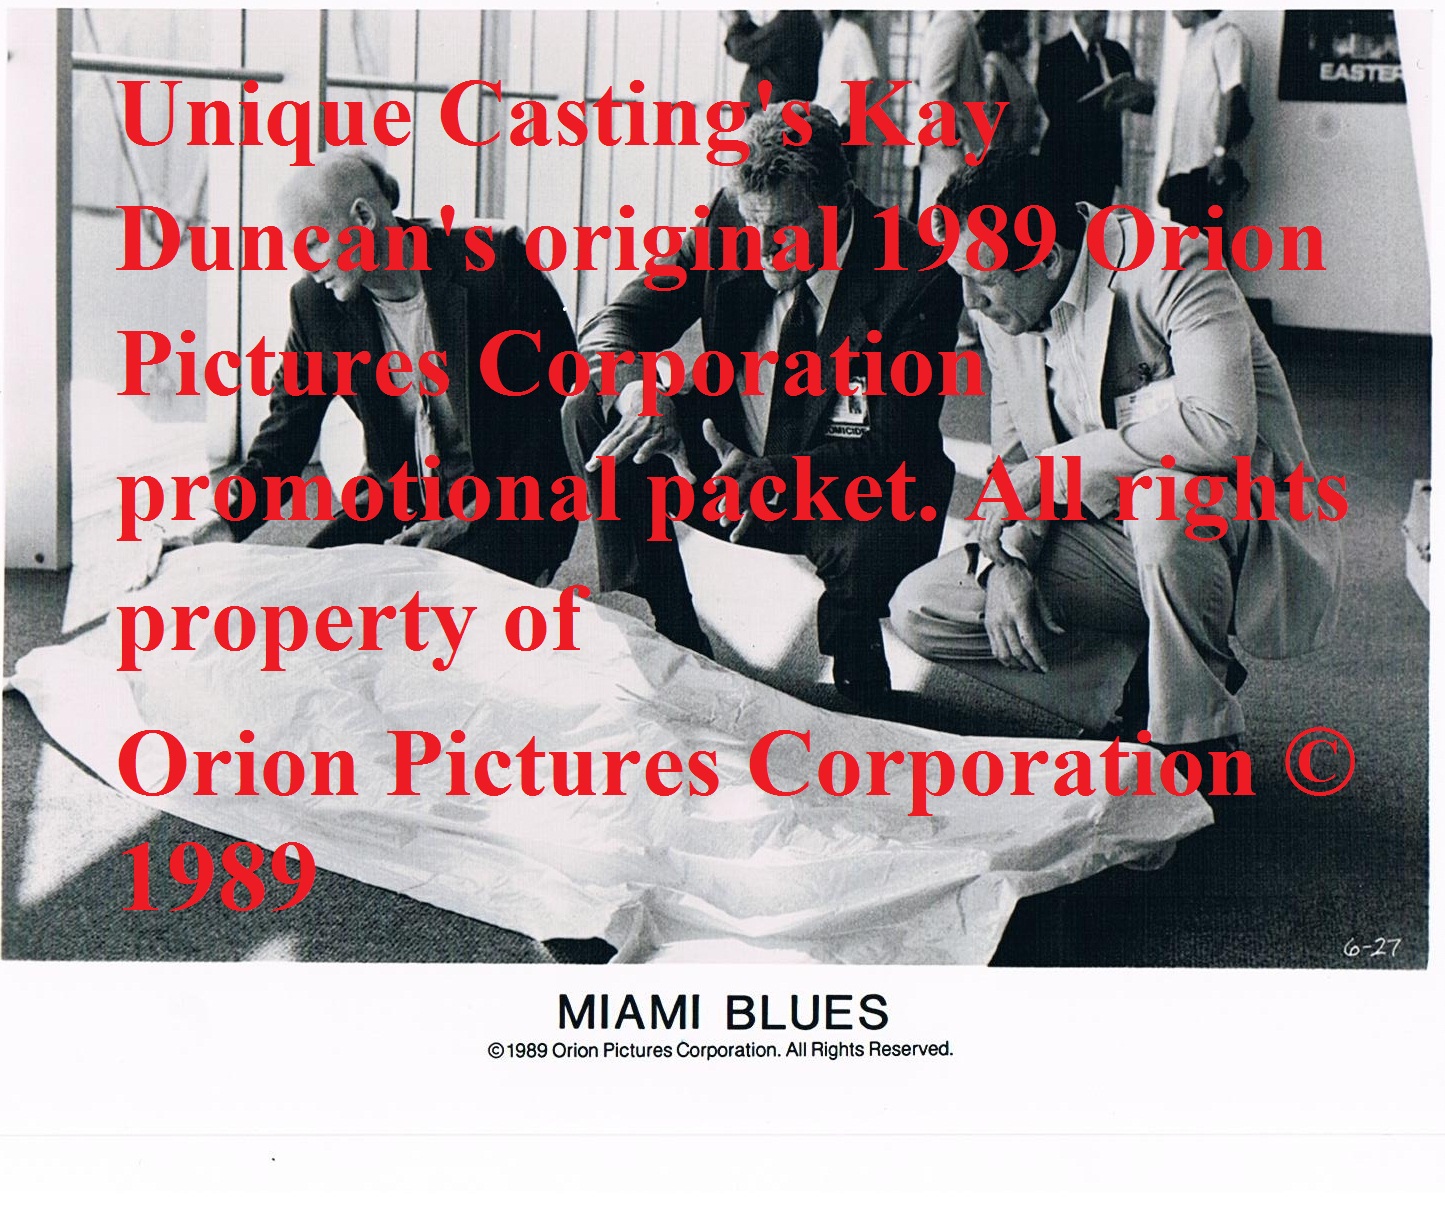 Miami Blues ©1989 Orion Pictures Corporation original 1989 promotional photo; Original photograph sits in Kay Duncan's Unique Casting office